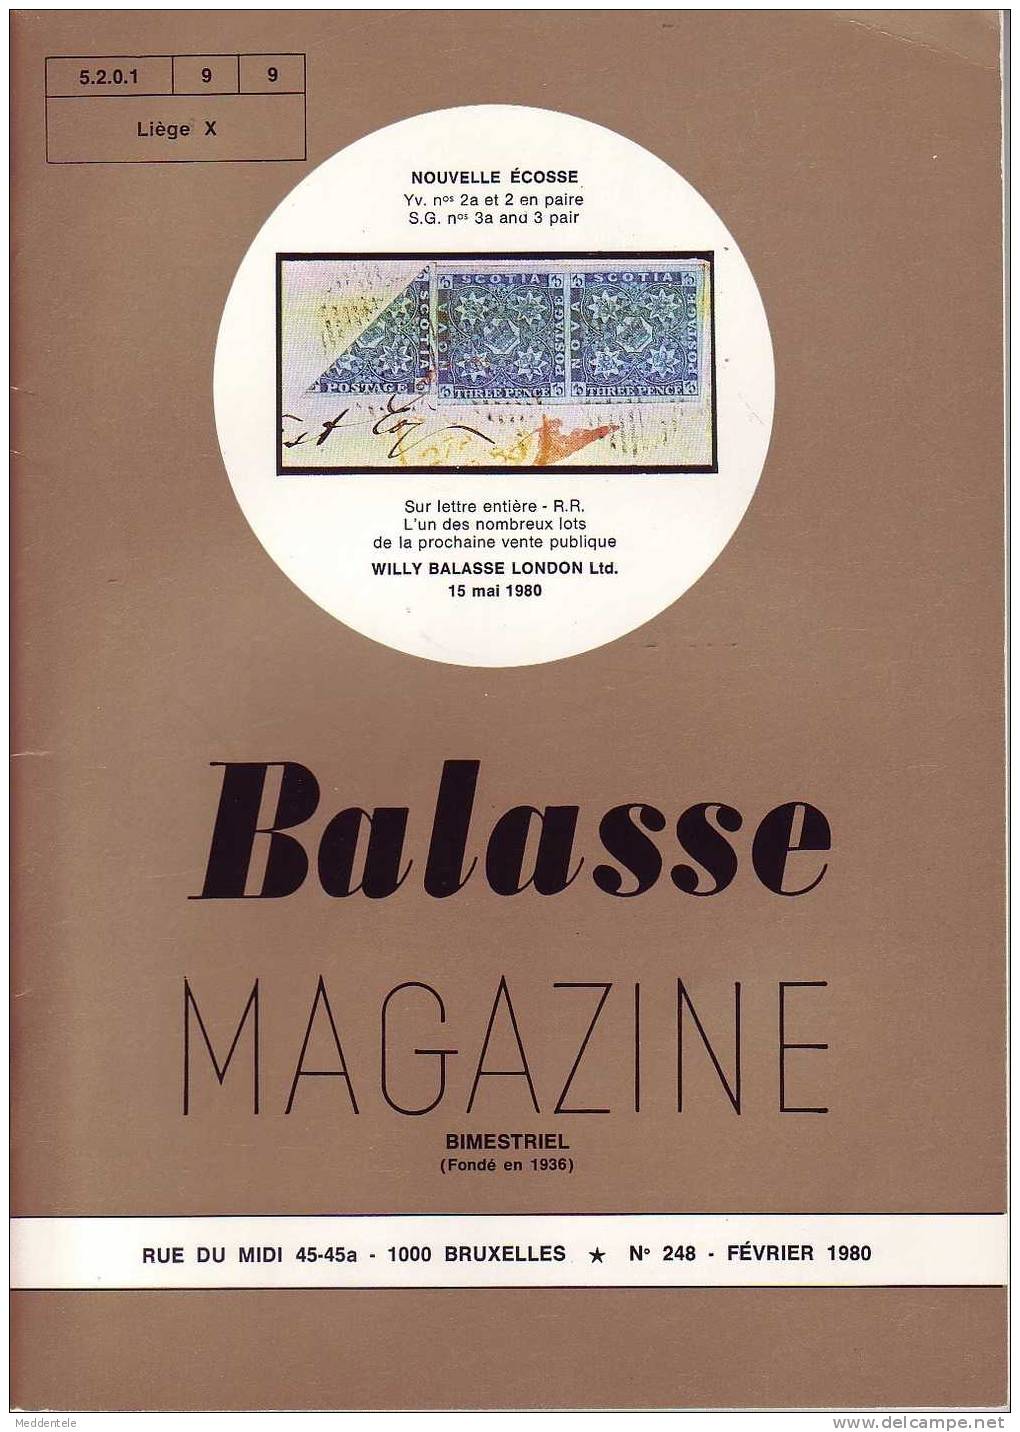 BALASSE MAGAZINE N° 248 - Francés (desde 1941)